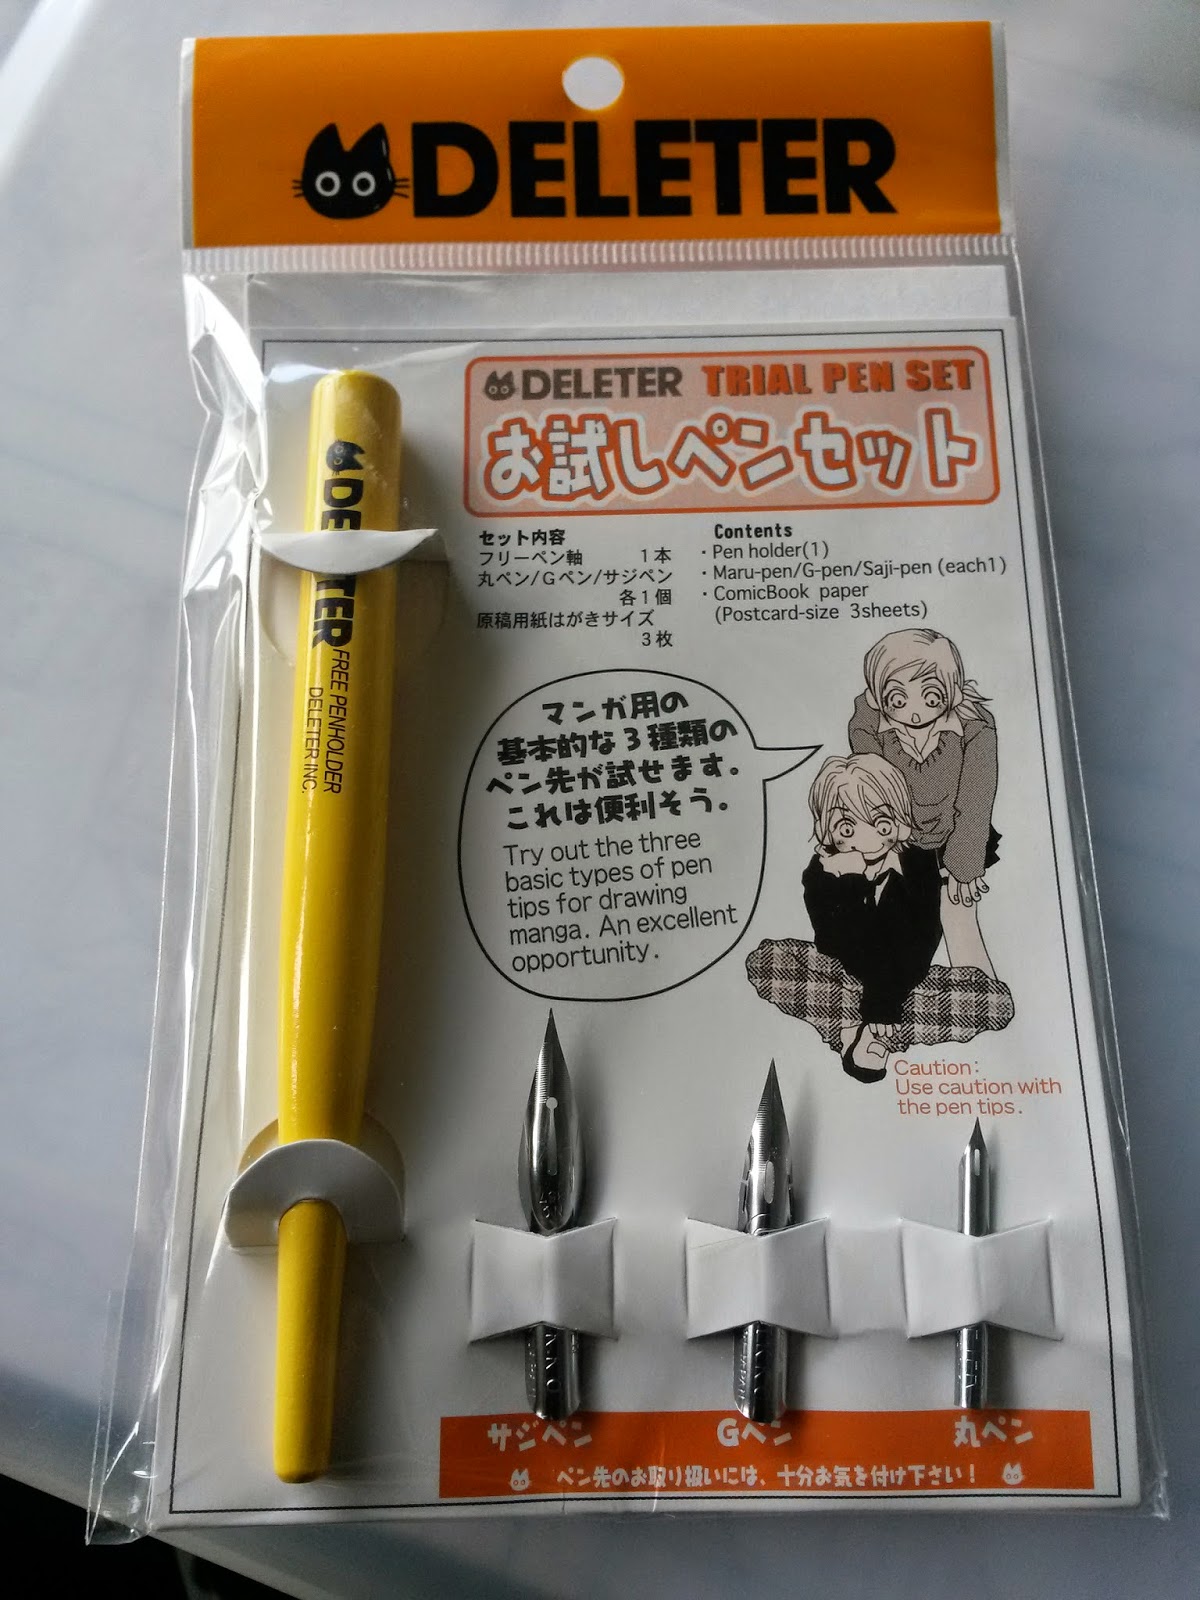 MangaCourseParty: [Manga Tool Review] - Deleter Trial Pen Set